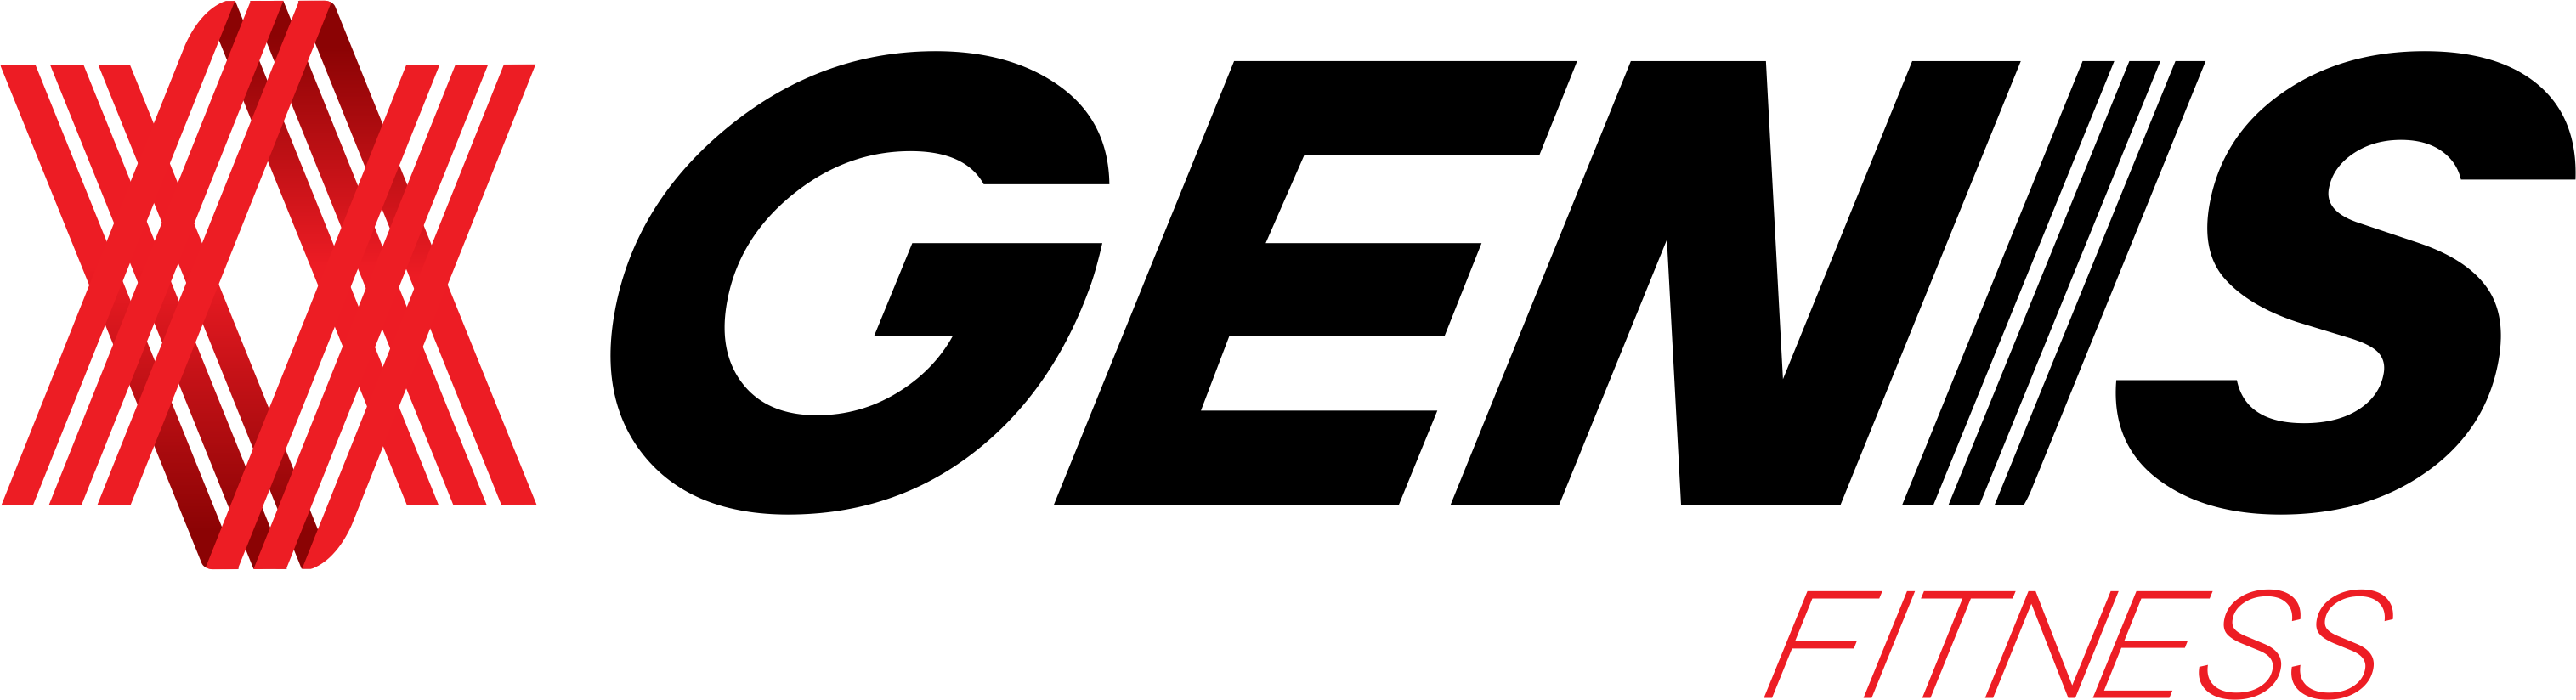 brand logo thumb